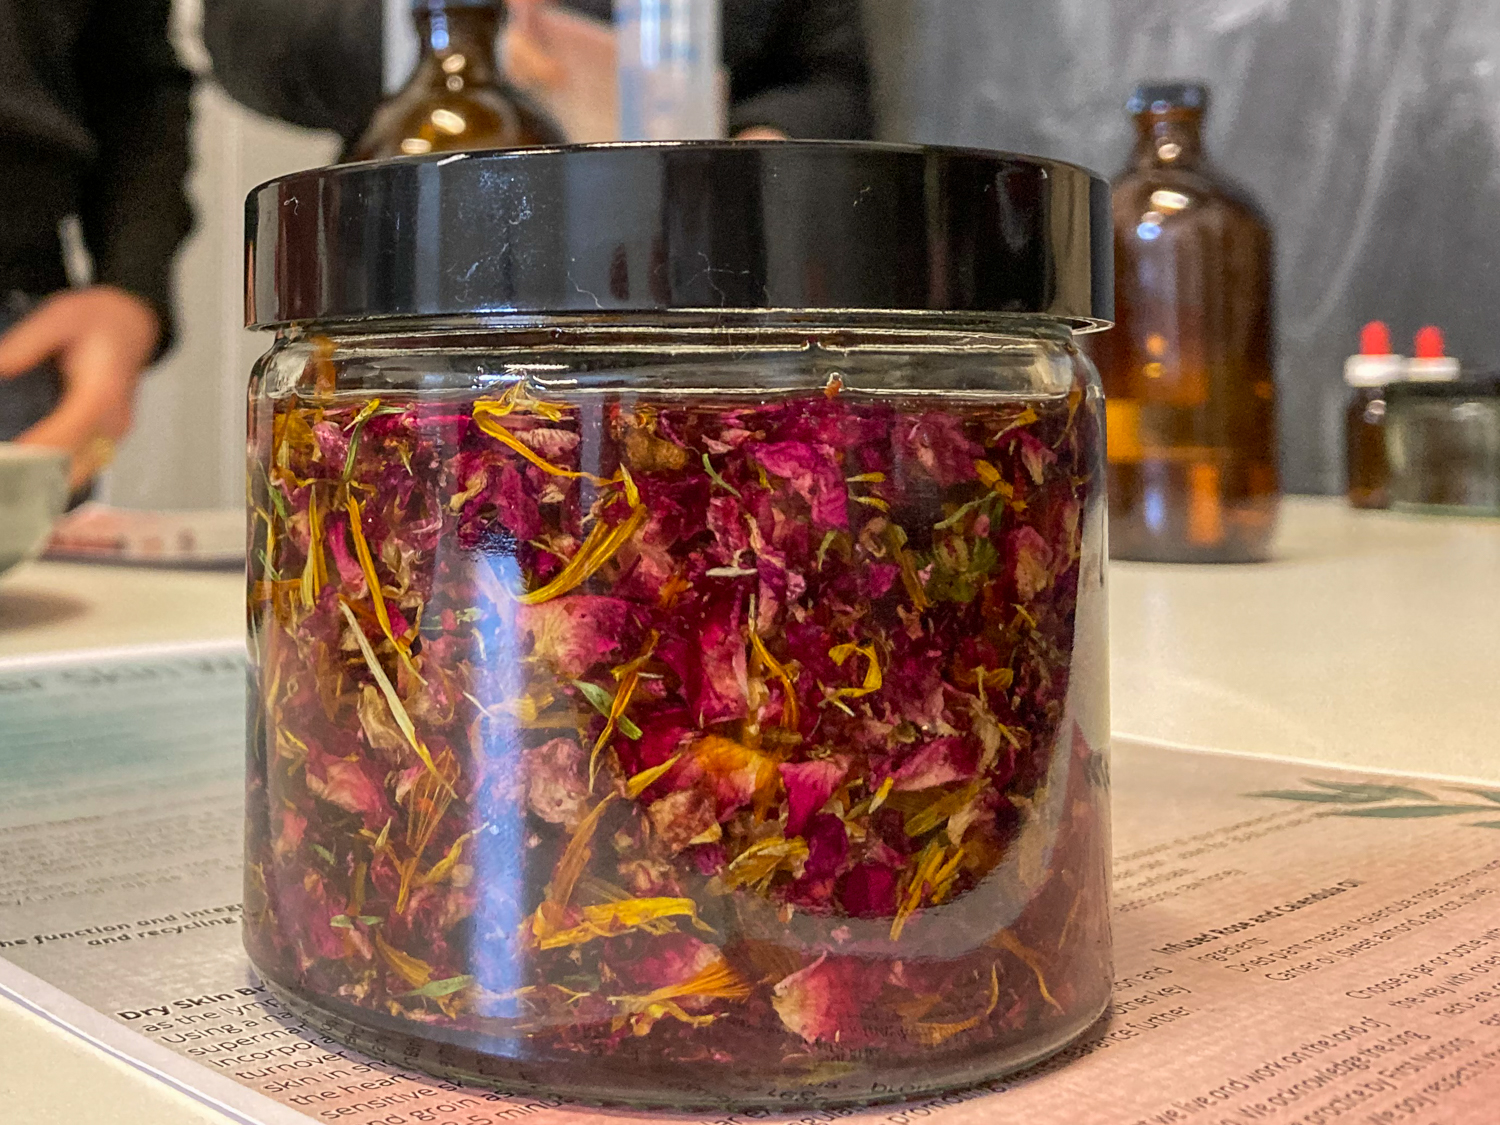 A jar of rose and calendula petals soaking in oil